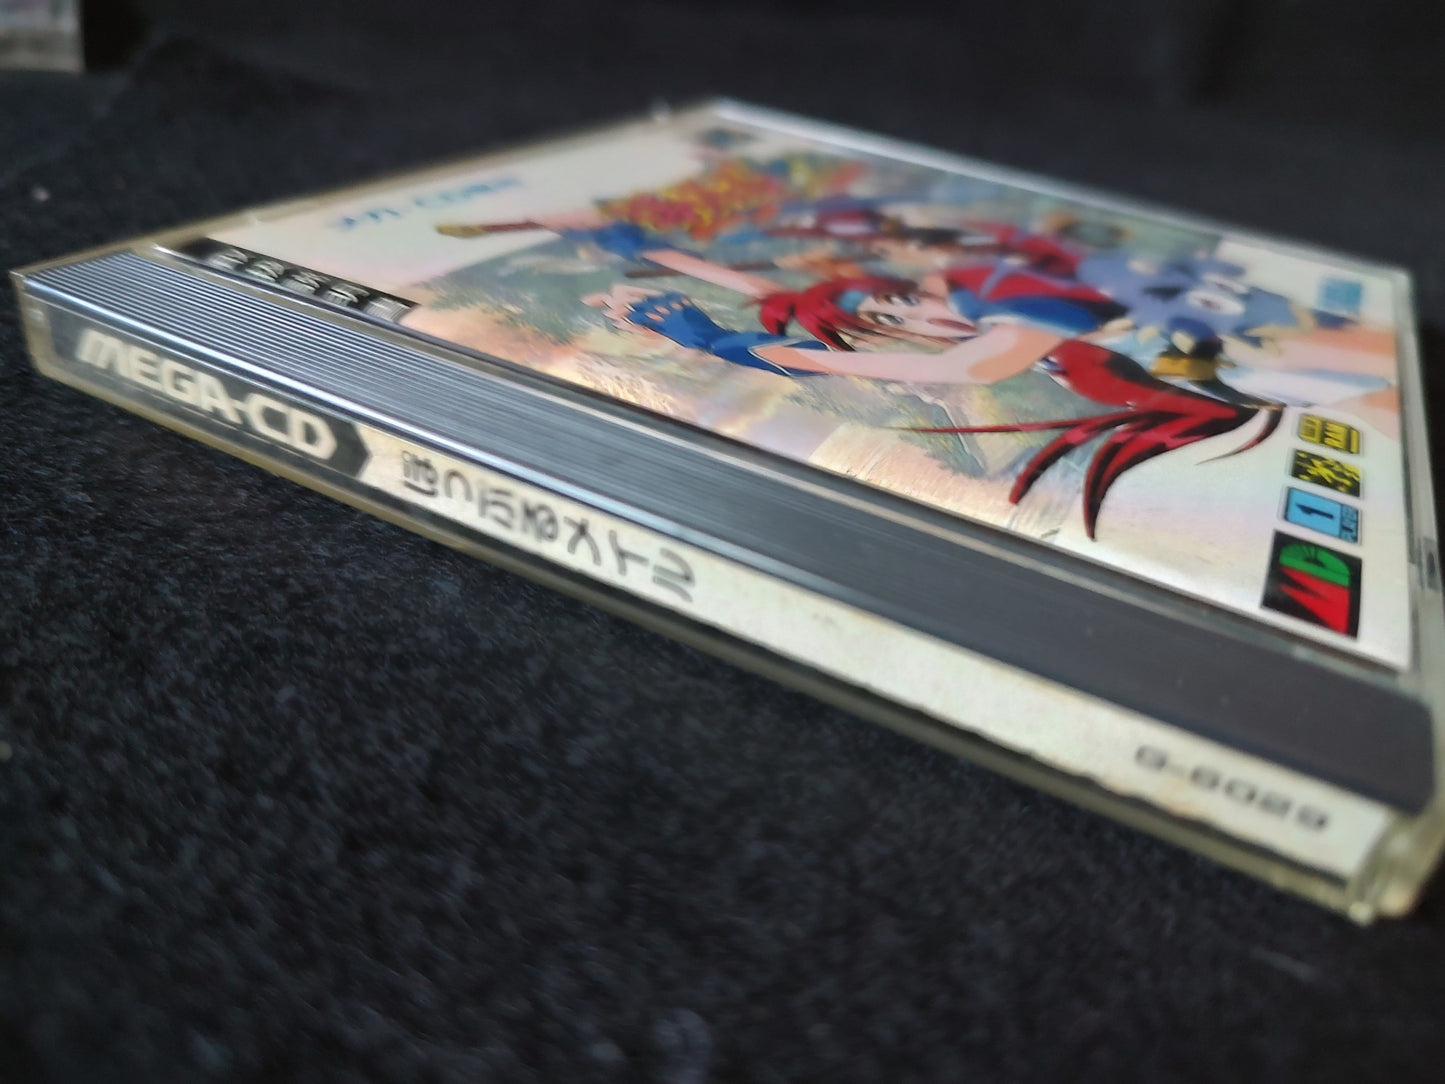 Popful Mail Falcom SEGA MEGA CD Game Disk,Manual,Cased set, tested-f0925-